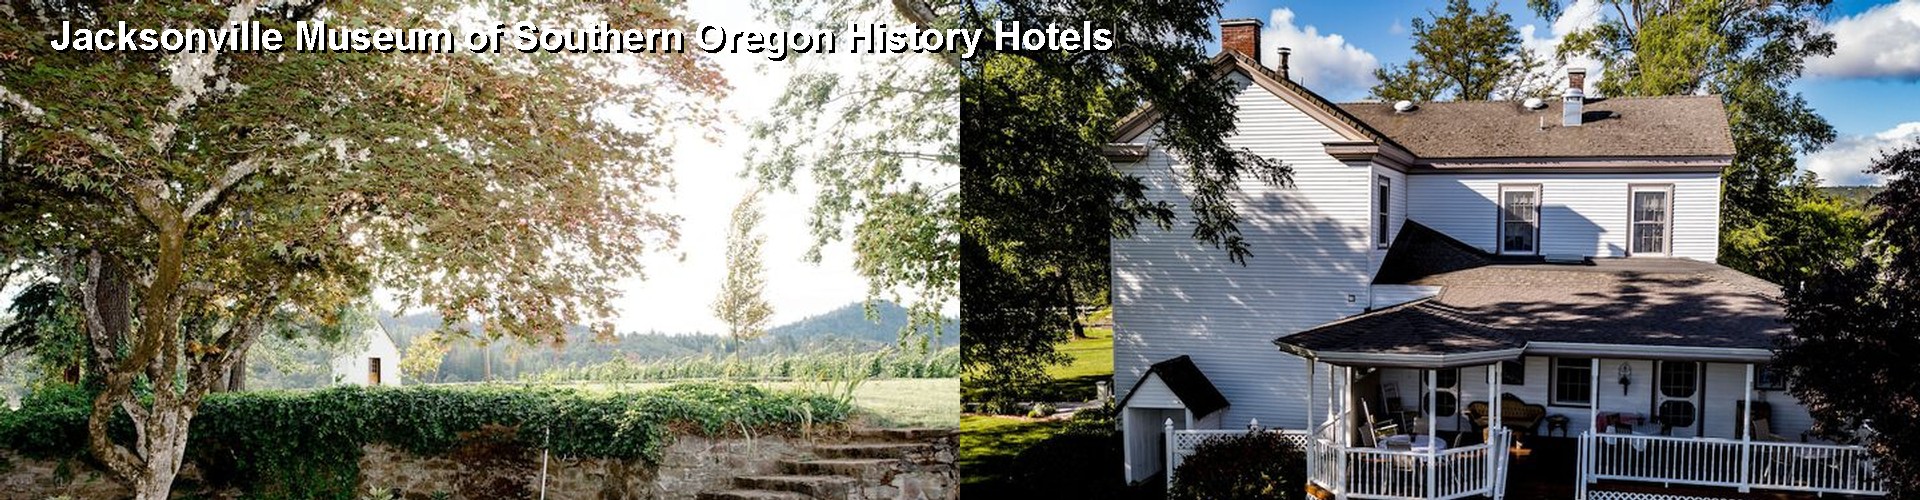 5 Best Hotels near Jacksonville Museum of Southern Oregon History